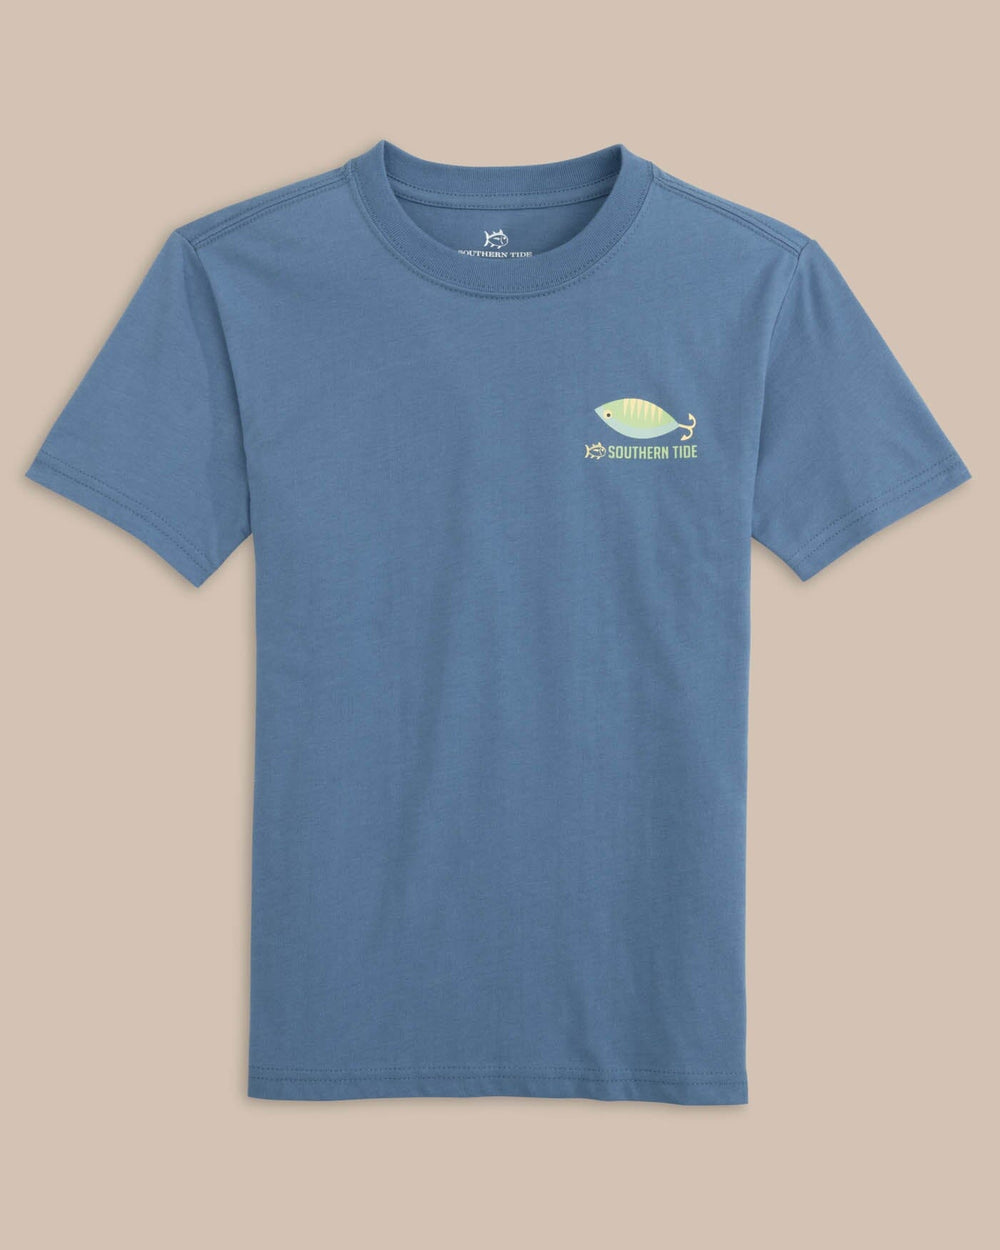 Southern Tide Sassy Sailing T-Shirt - Dream Blue